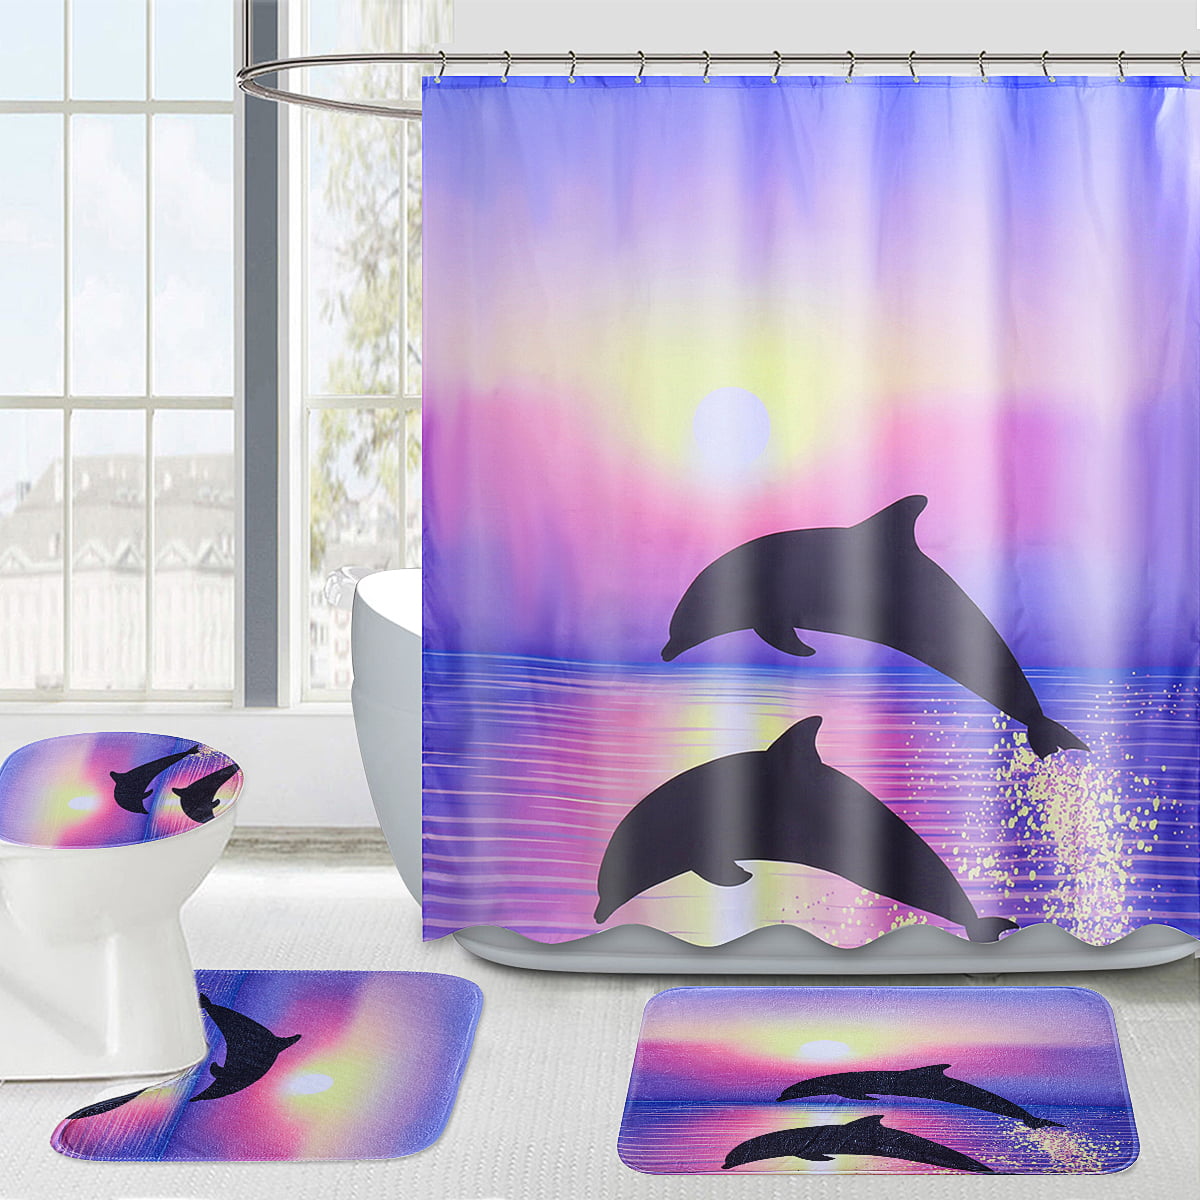 The Wolf Theme Waterproof Fabric Home Decor Shower Curtain Bathroom Mat 